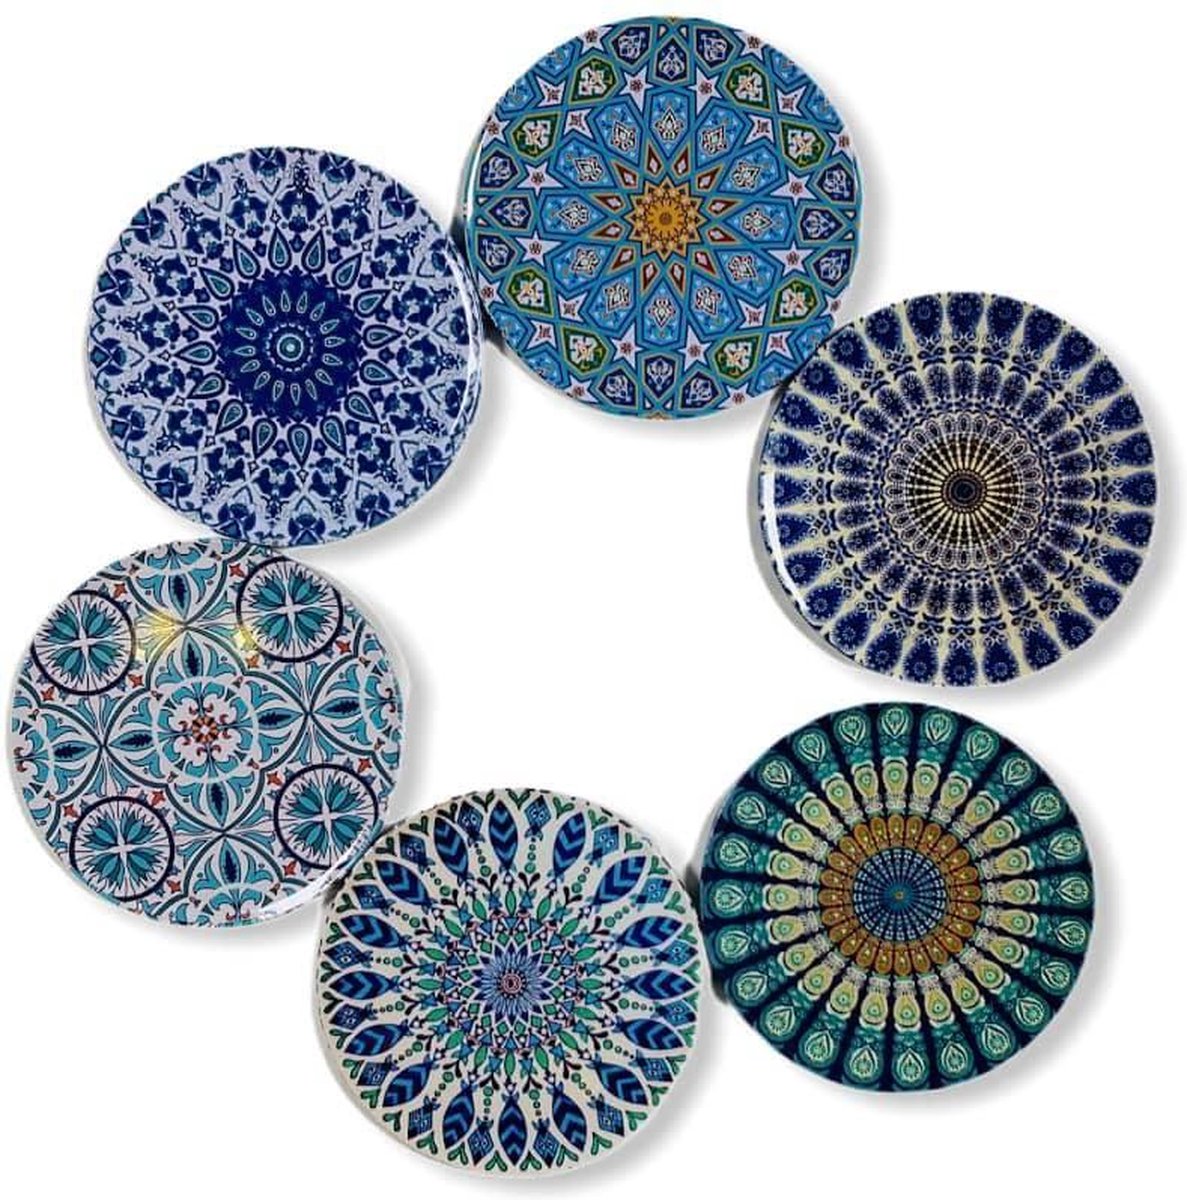 Onderzetters - Set van 6 - Rond - Onderzetters voor glazen - Bohemian - Oosterse - Mandala design - Coasters - Moederdag cadeau - Sunar Home